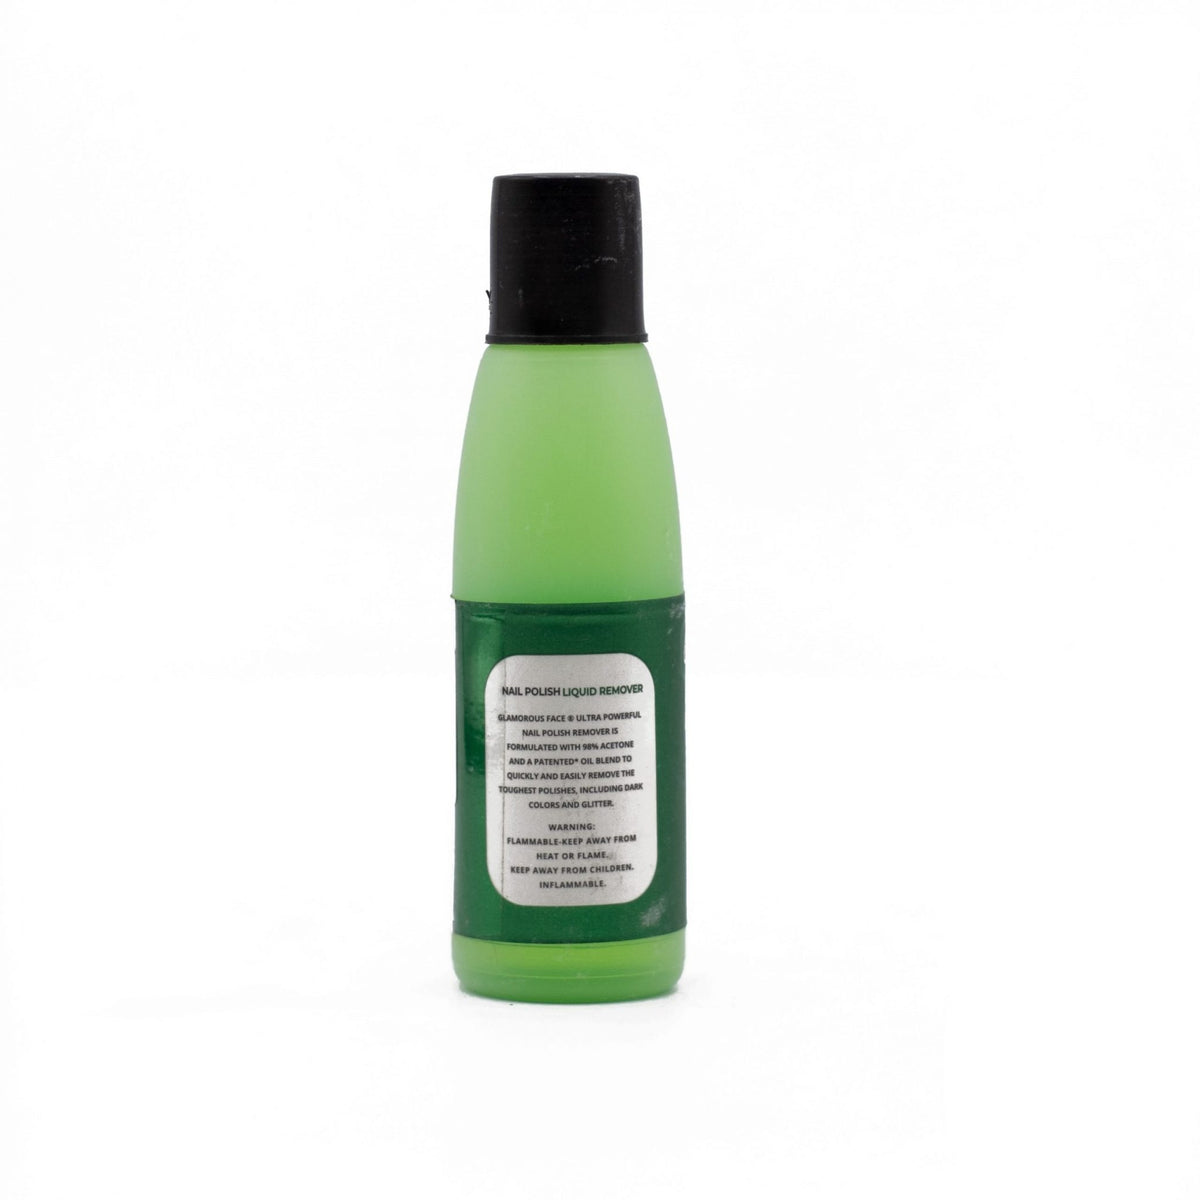 Glamorous Face Expert Touch Nail Polish Remover Pro Vitamin B5 Aloevera 75ml freeshipping - lasertag.pk